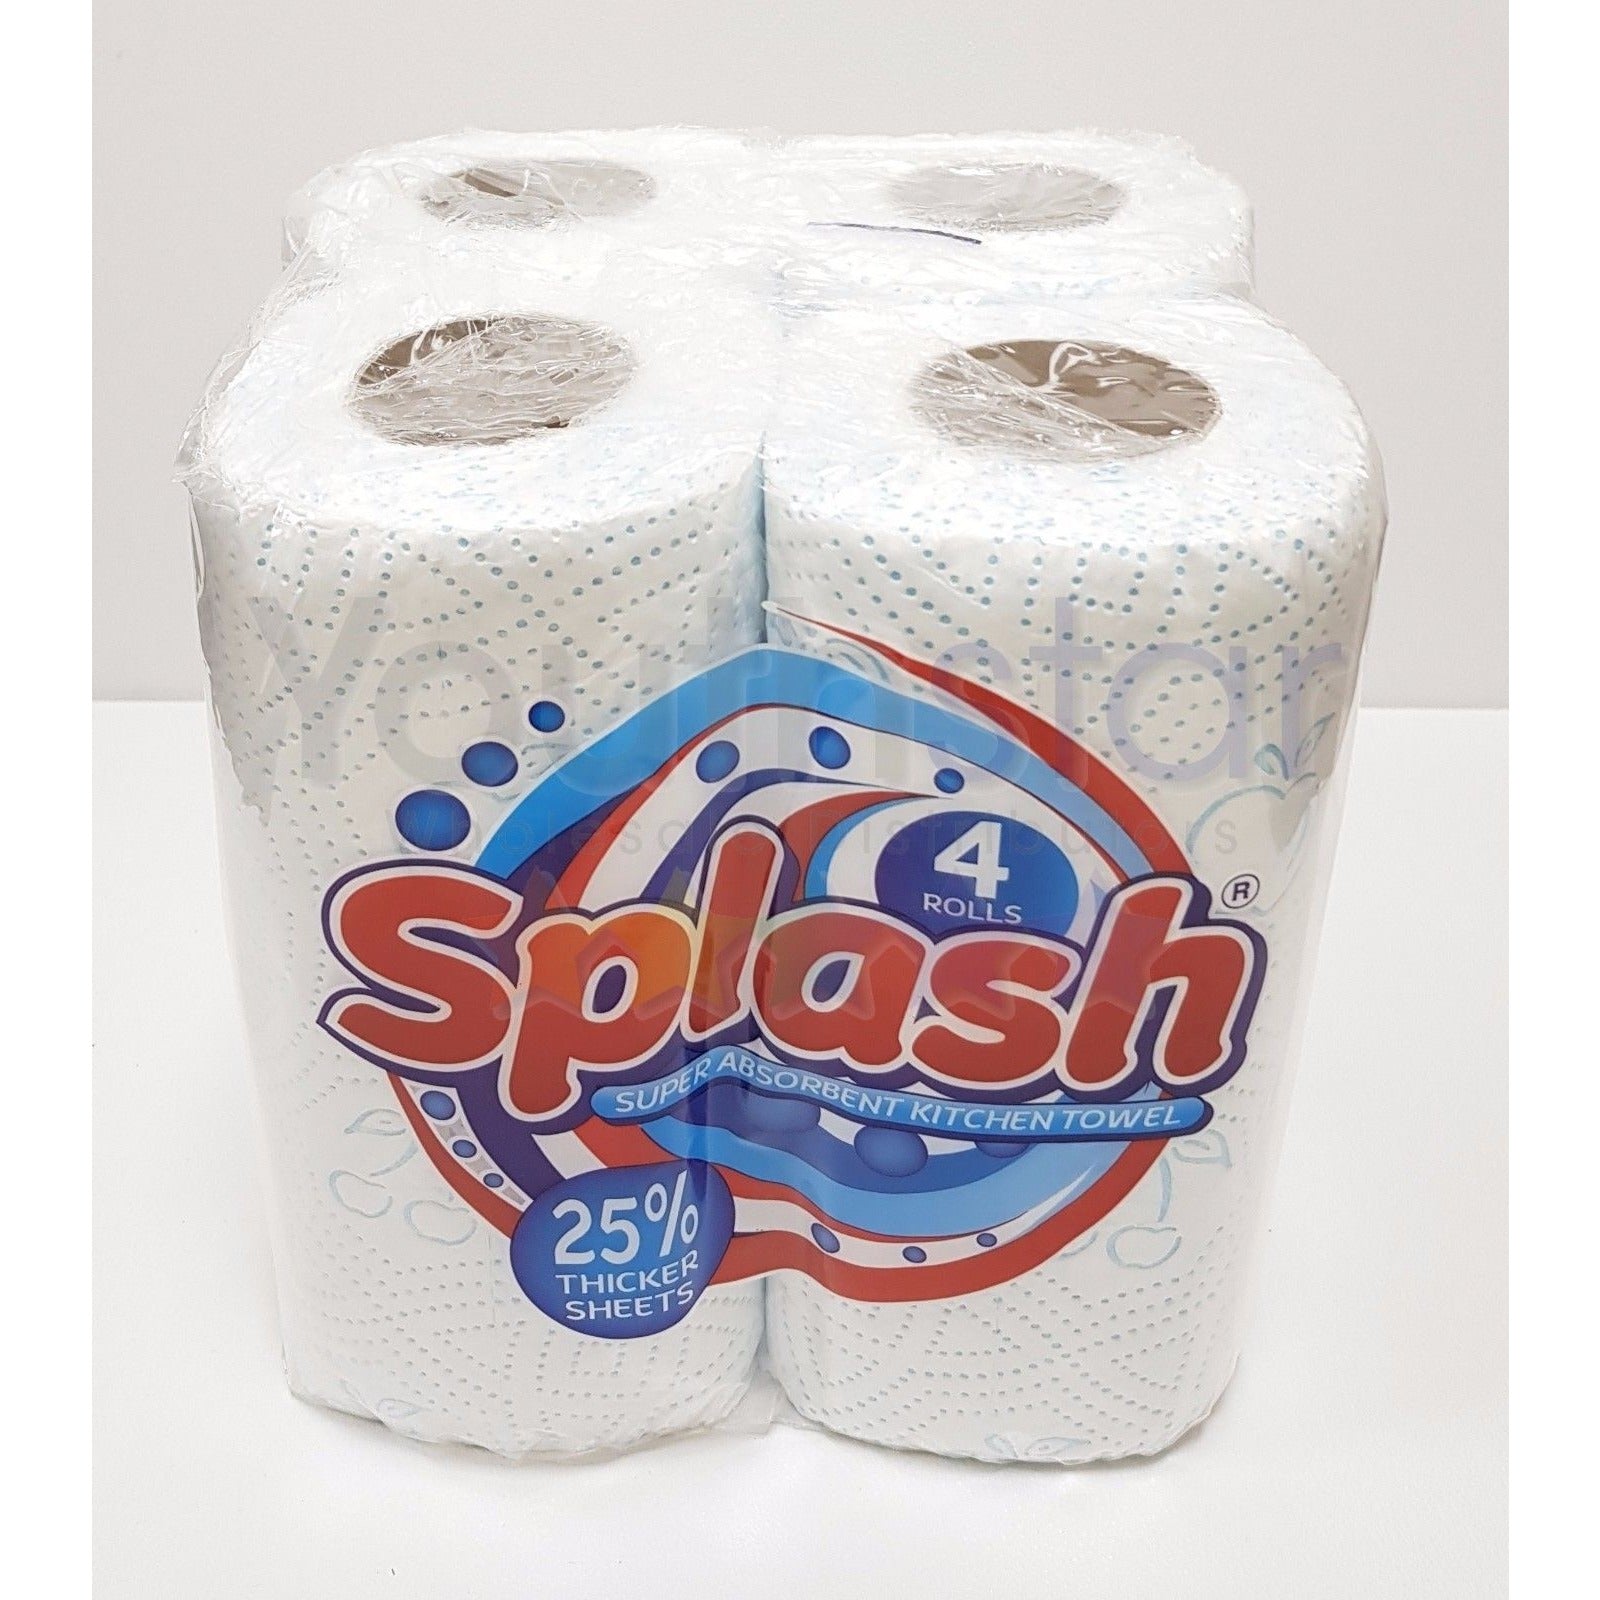 Splash Kitchen Roll / Towel 2 Ply 10m Per Roll – Super Absorbent Printed